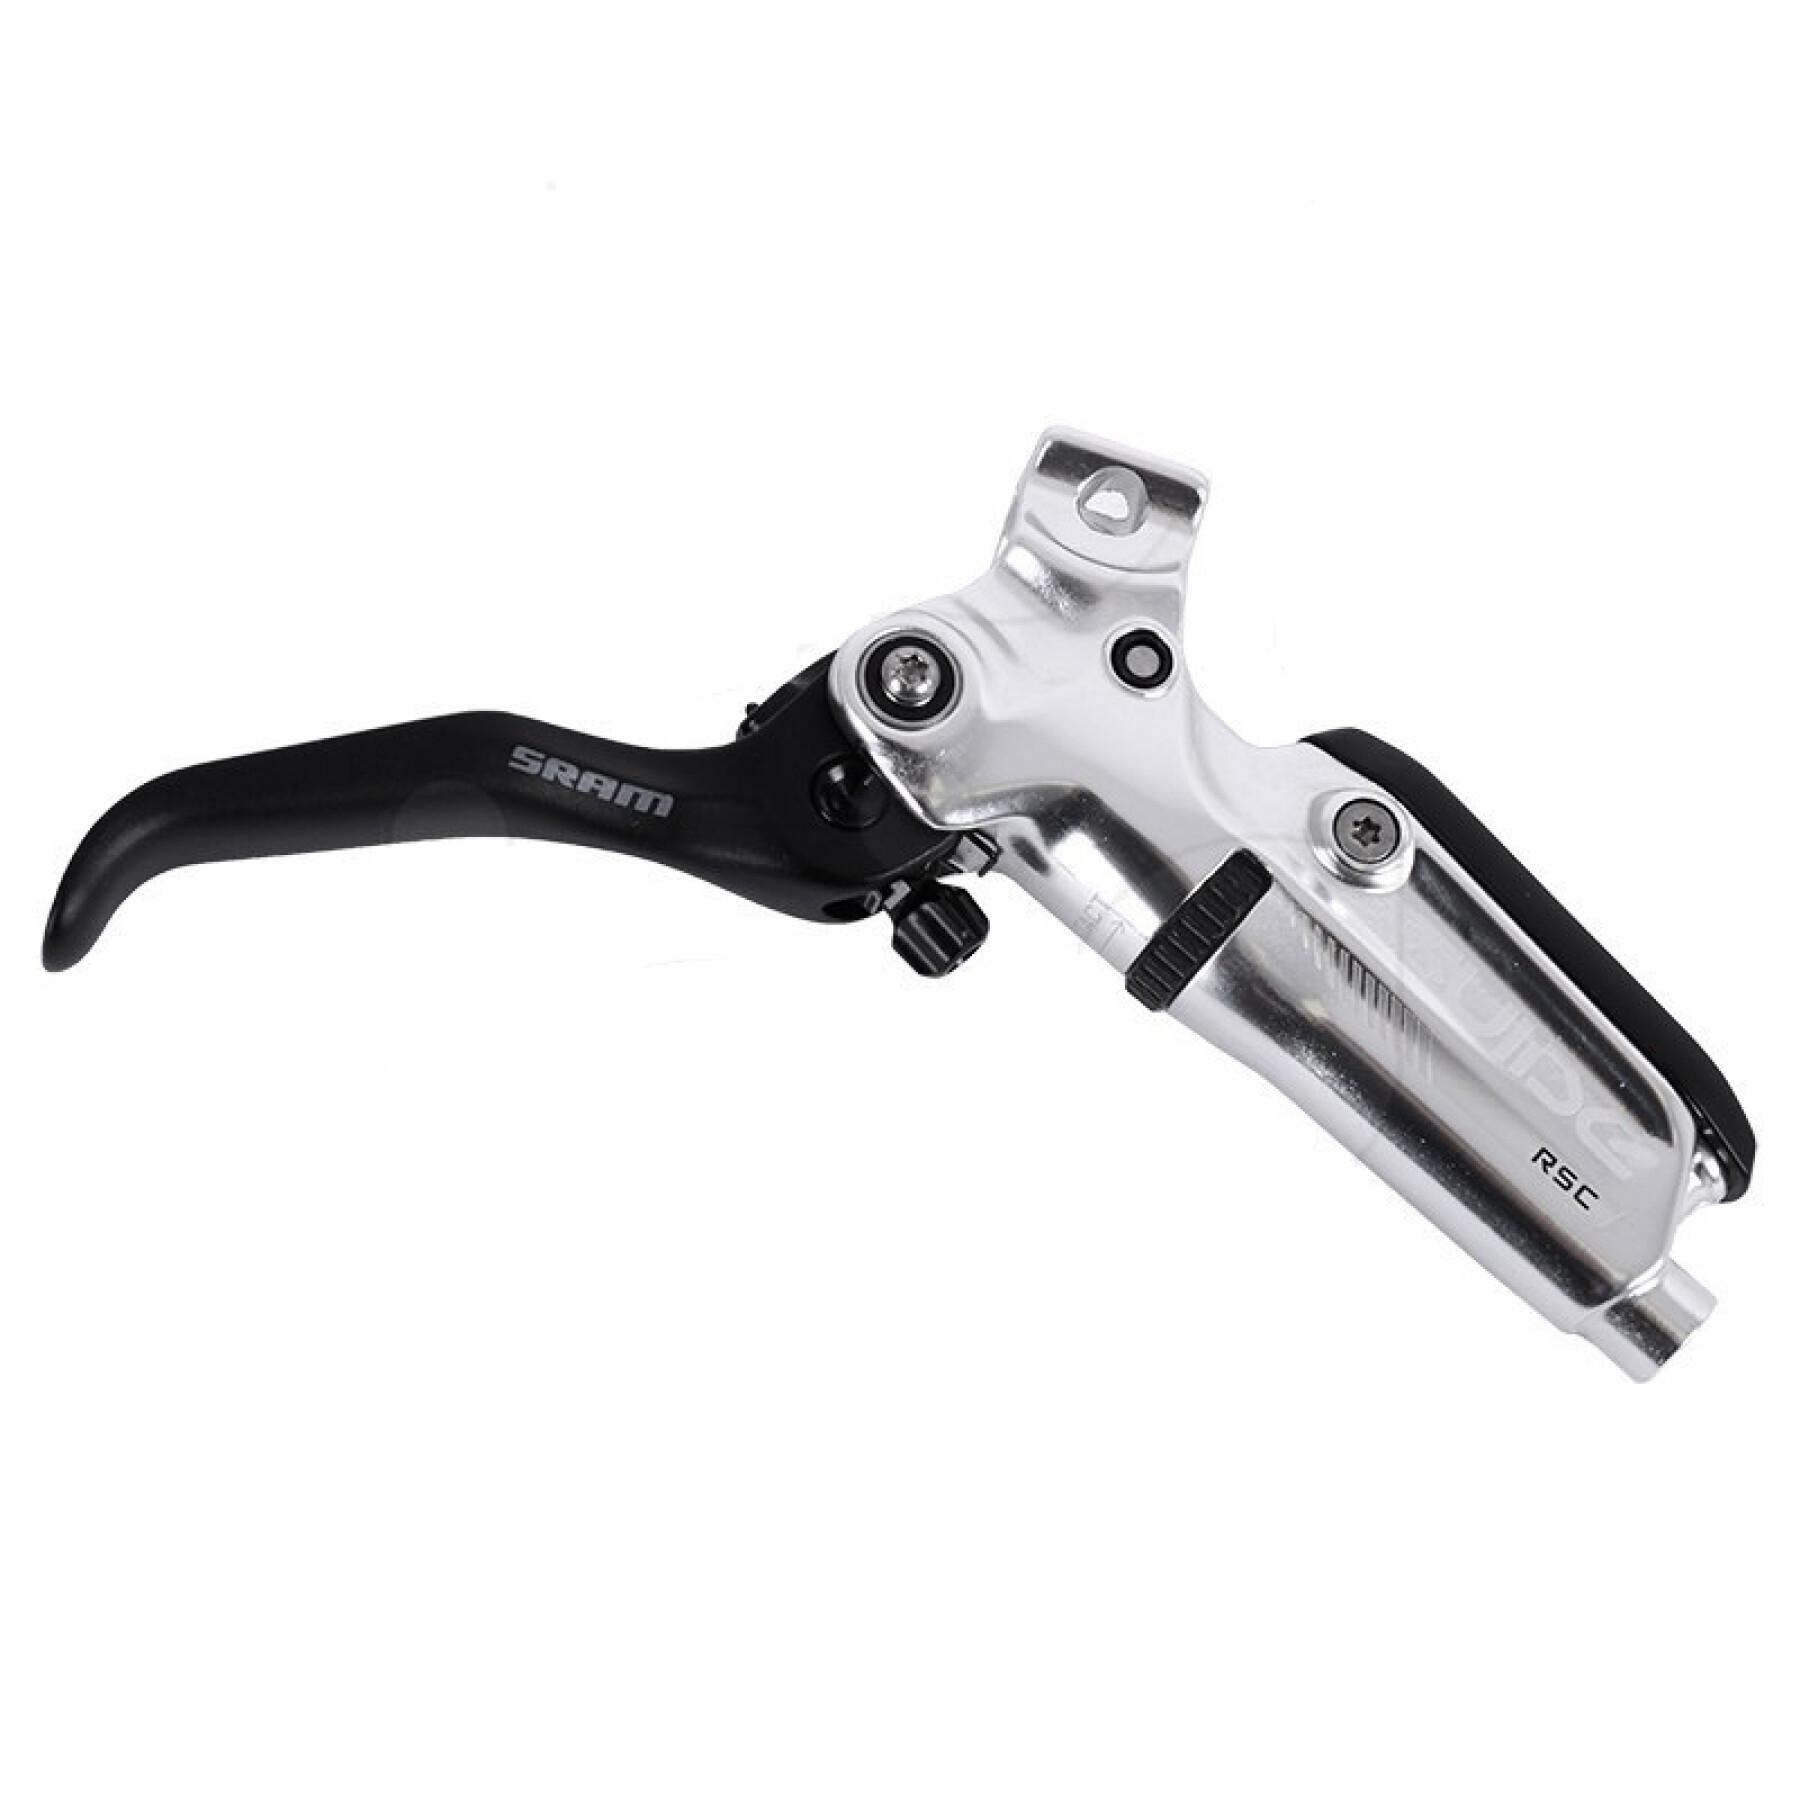 Aluminum brake lever replacement kit Sram Rsc V2